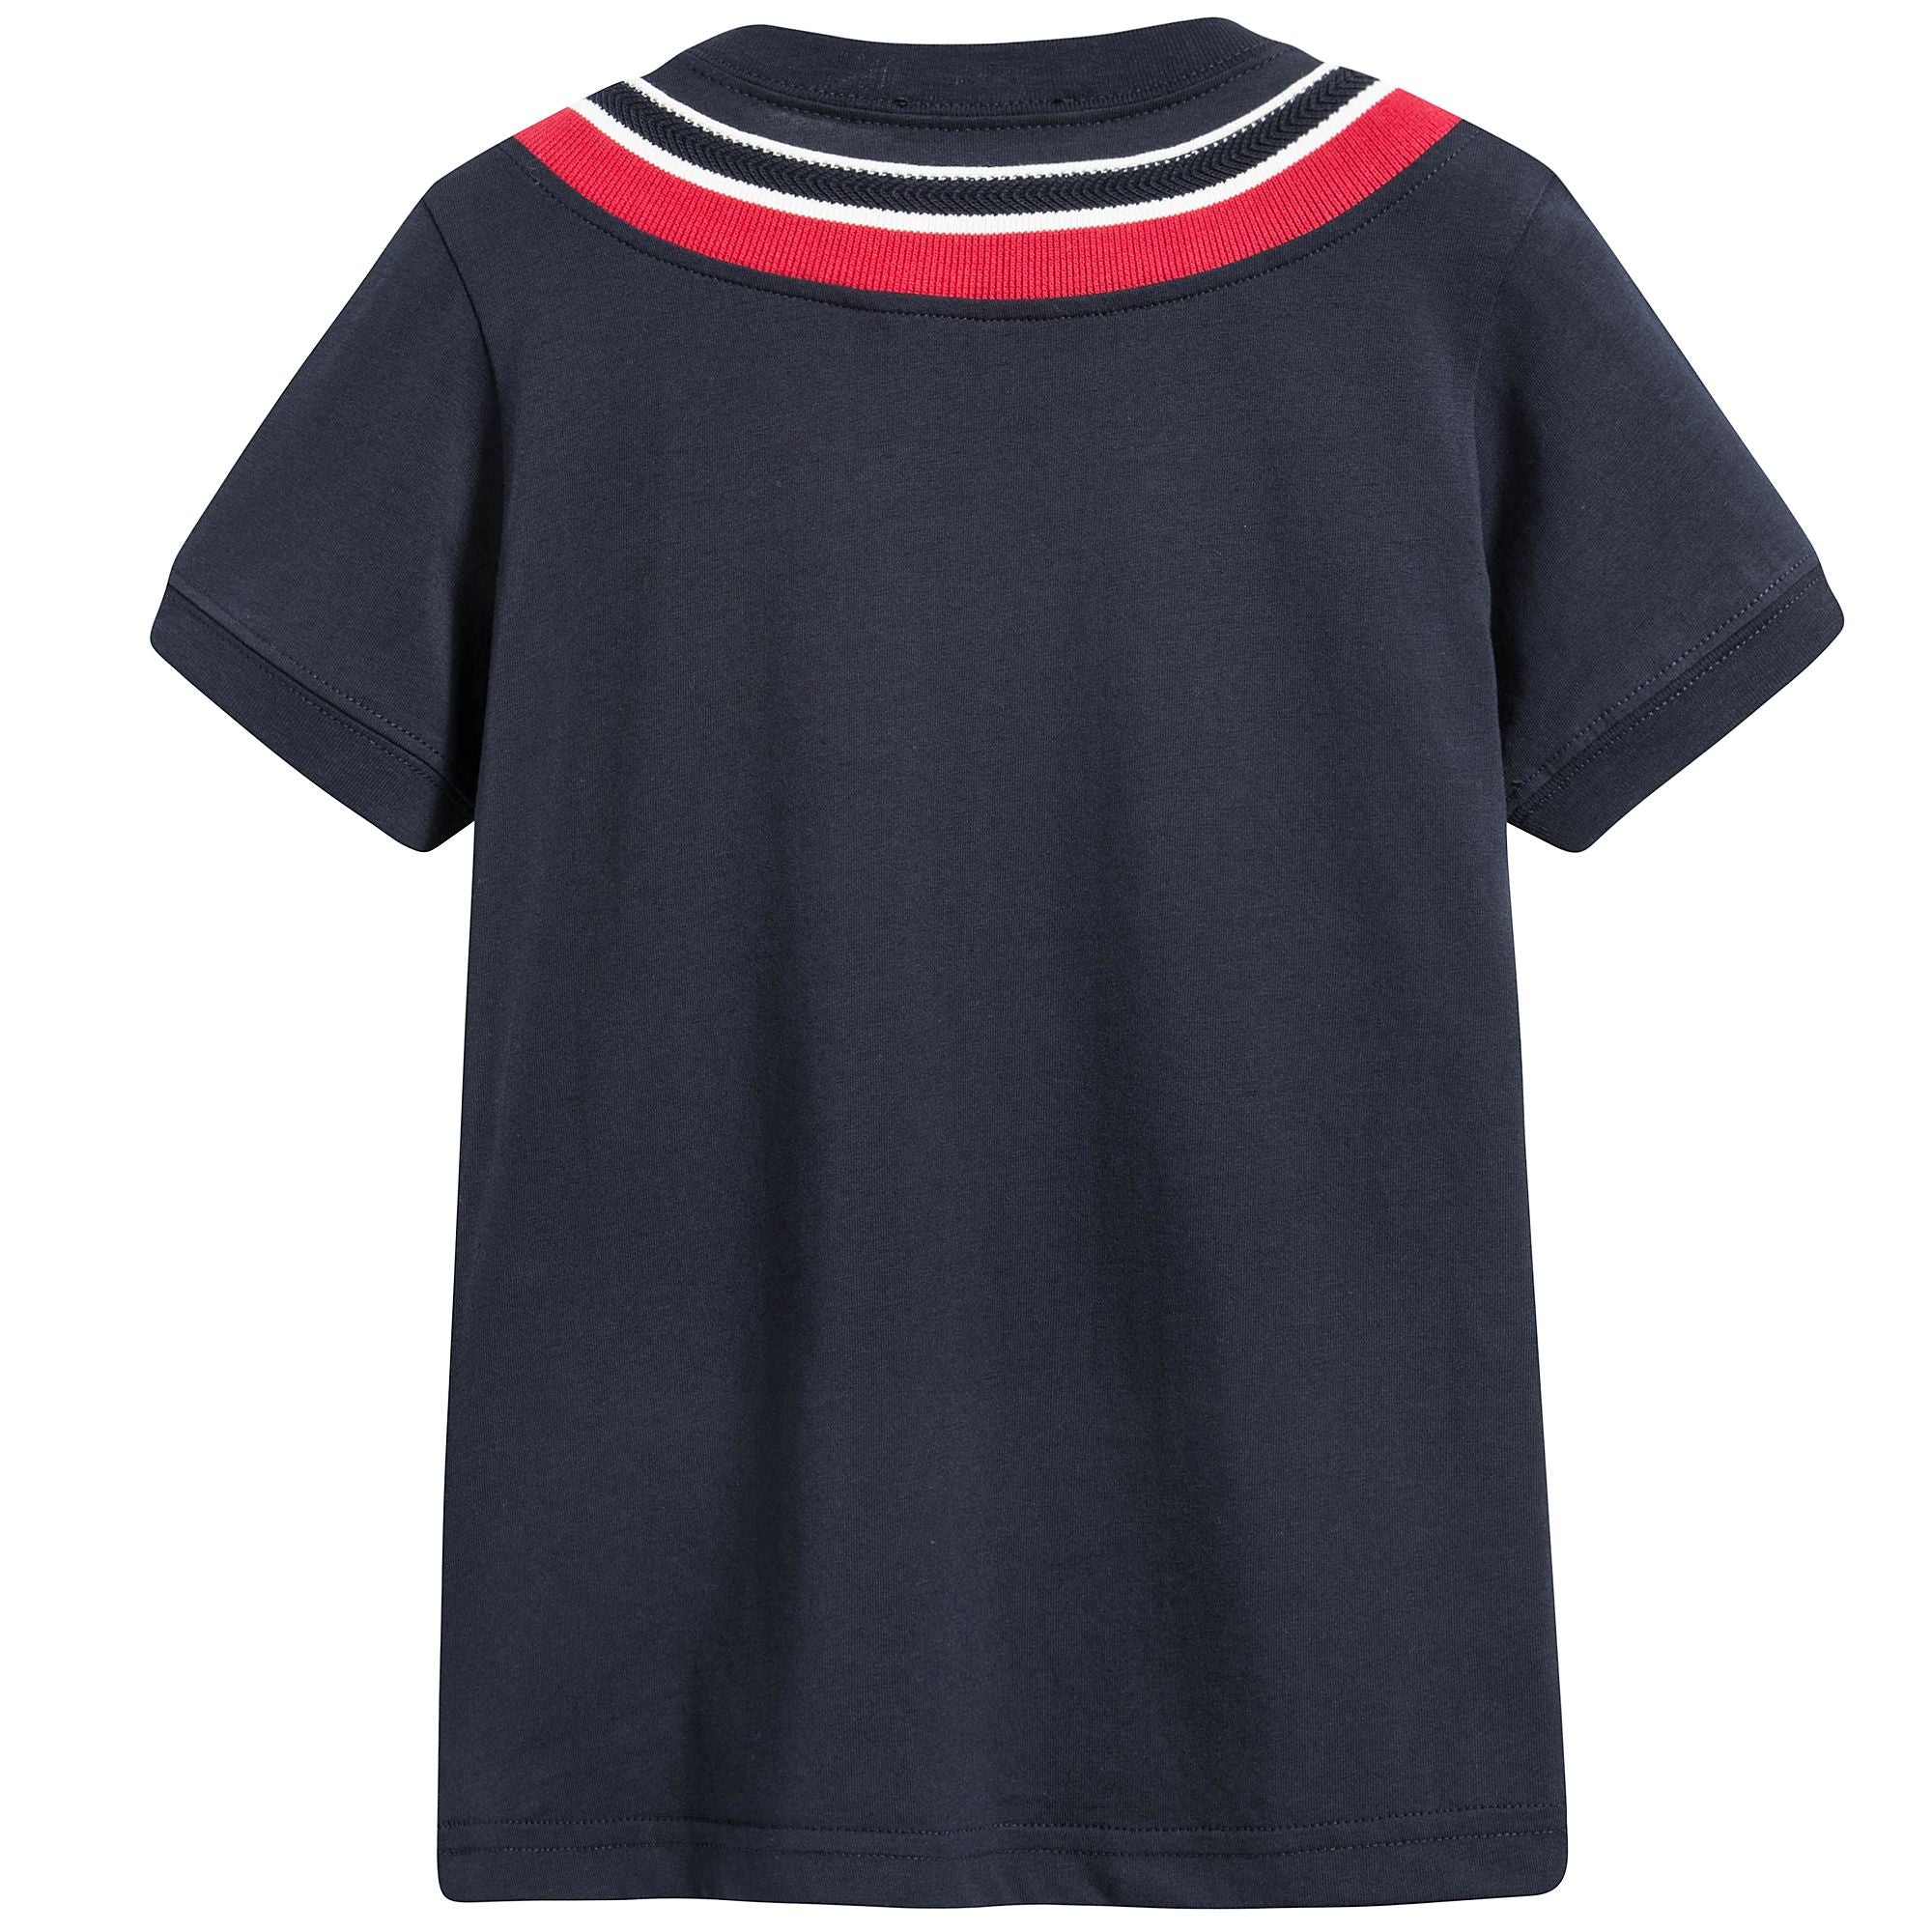 Girls Navy Blue "Maglia" T-shirt